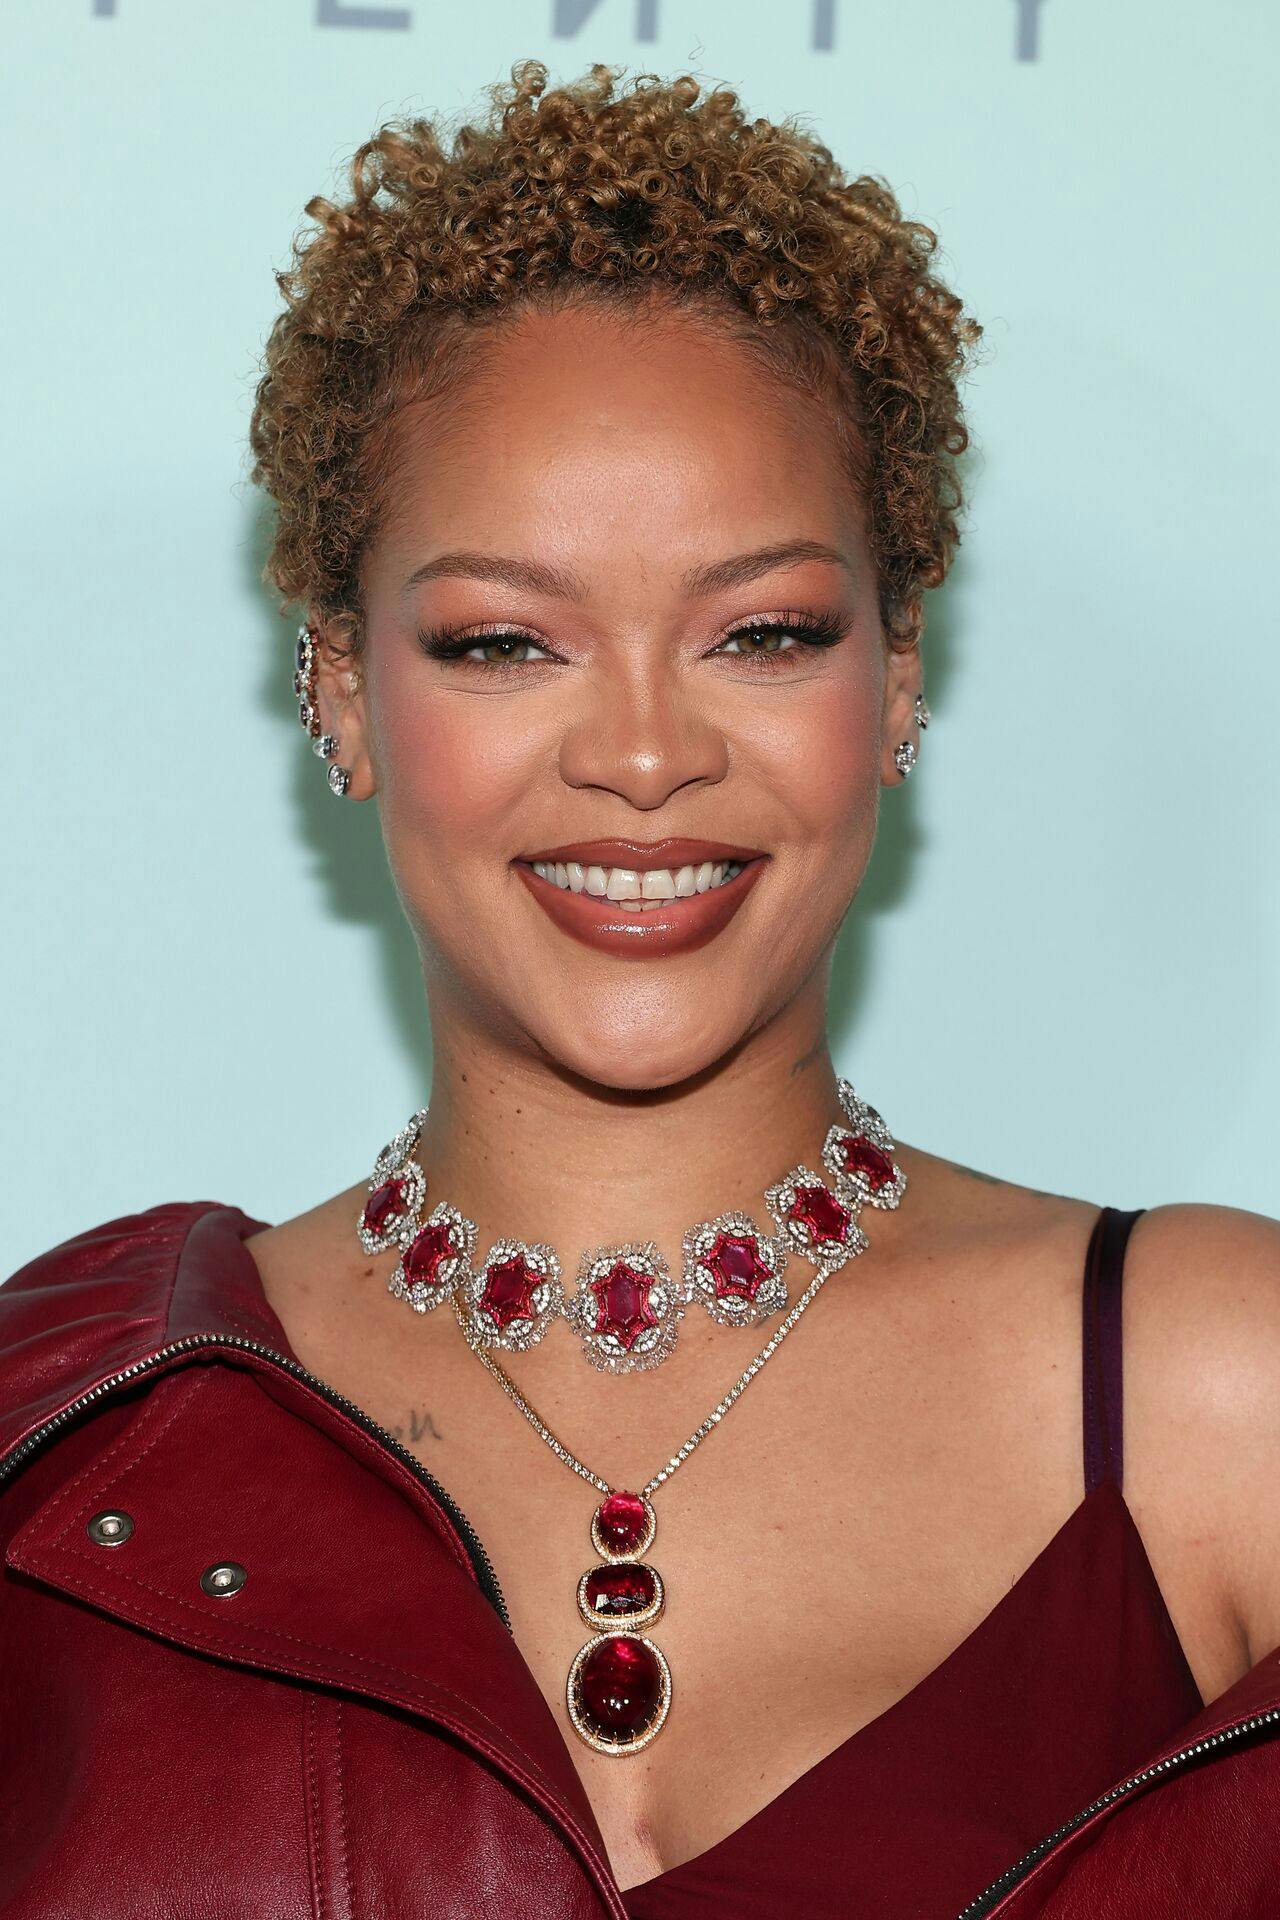 Fans fik mandag et sjældent kig på Rihannas naturlige hår.